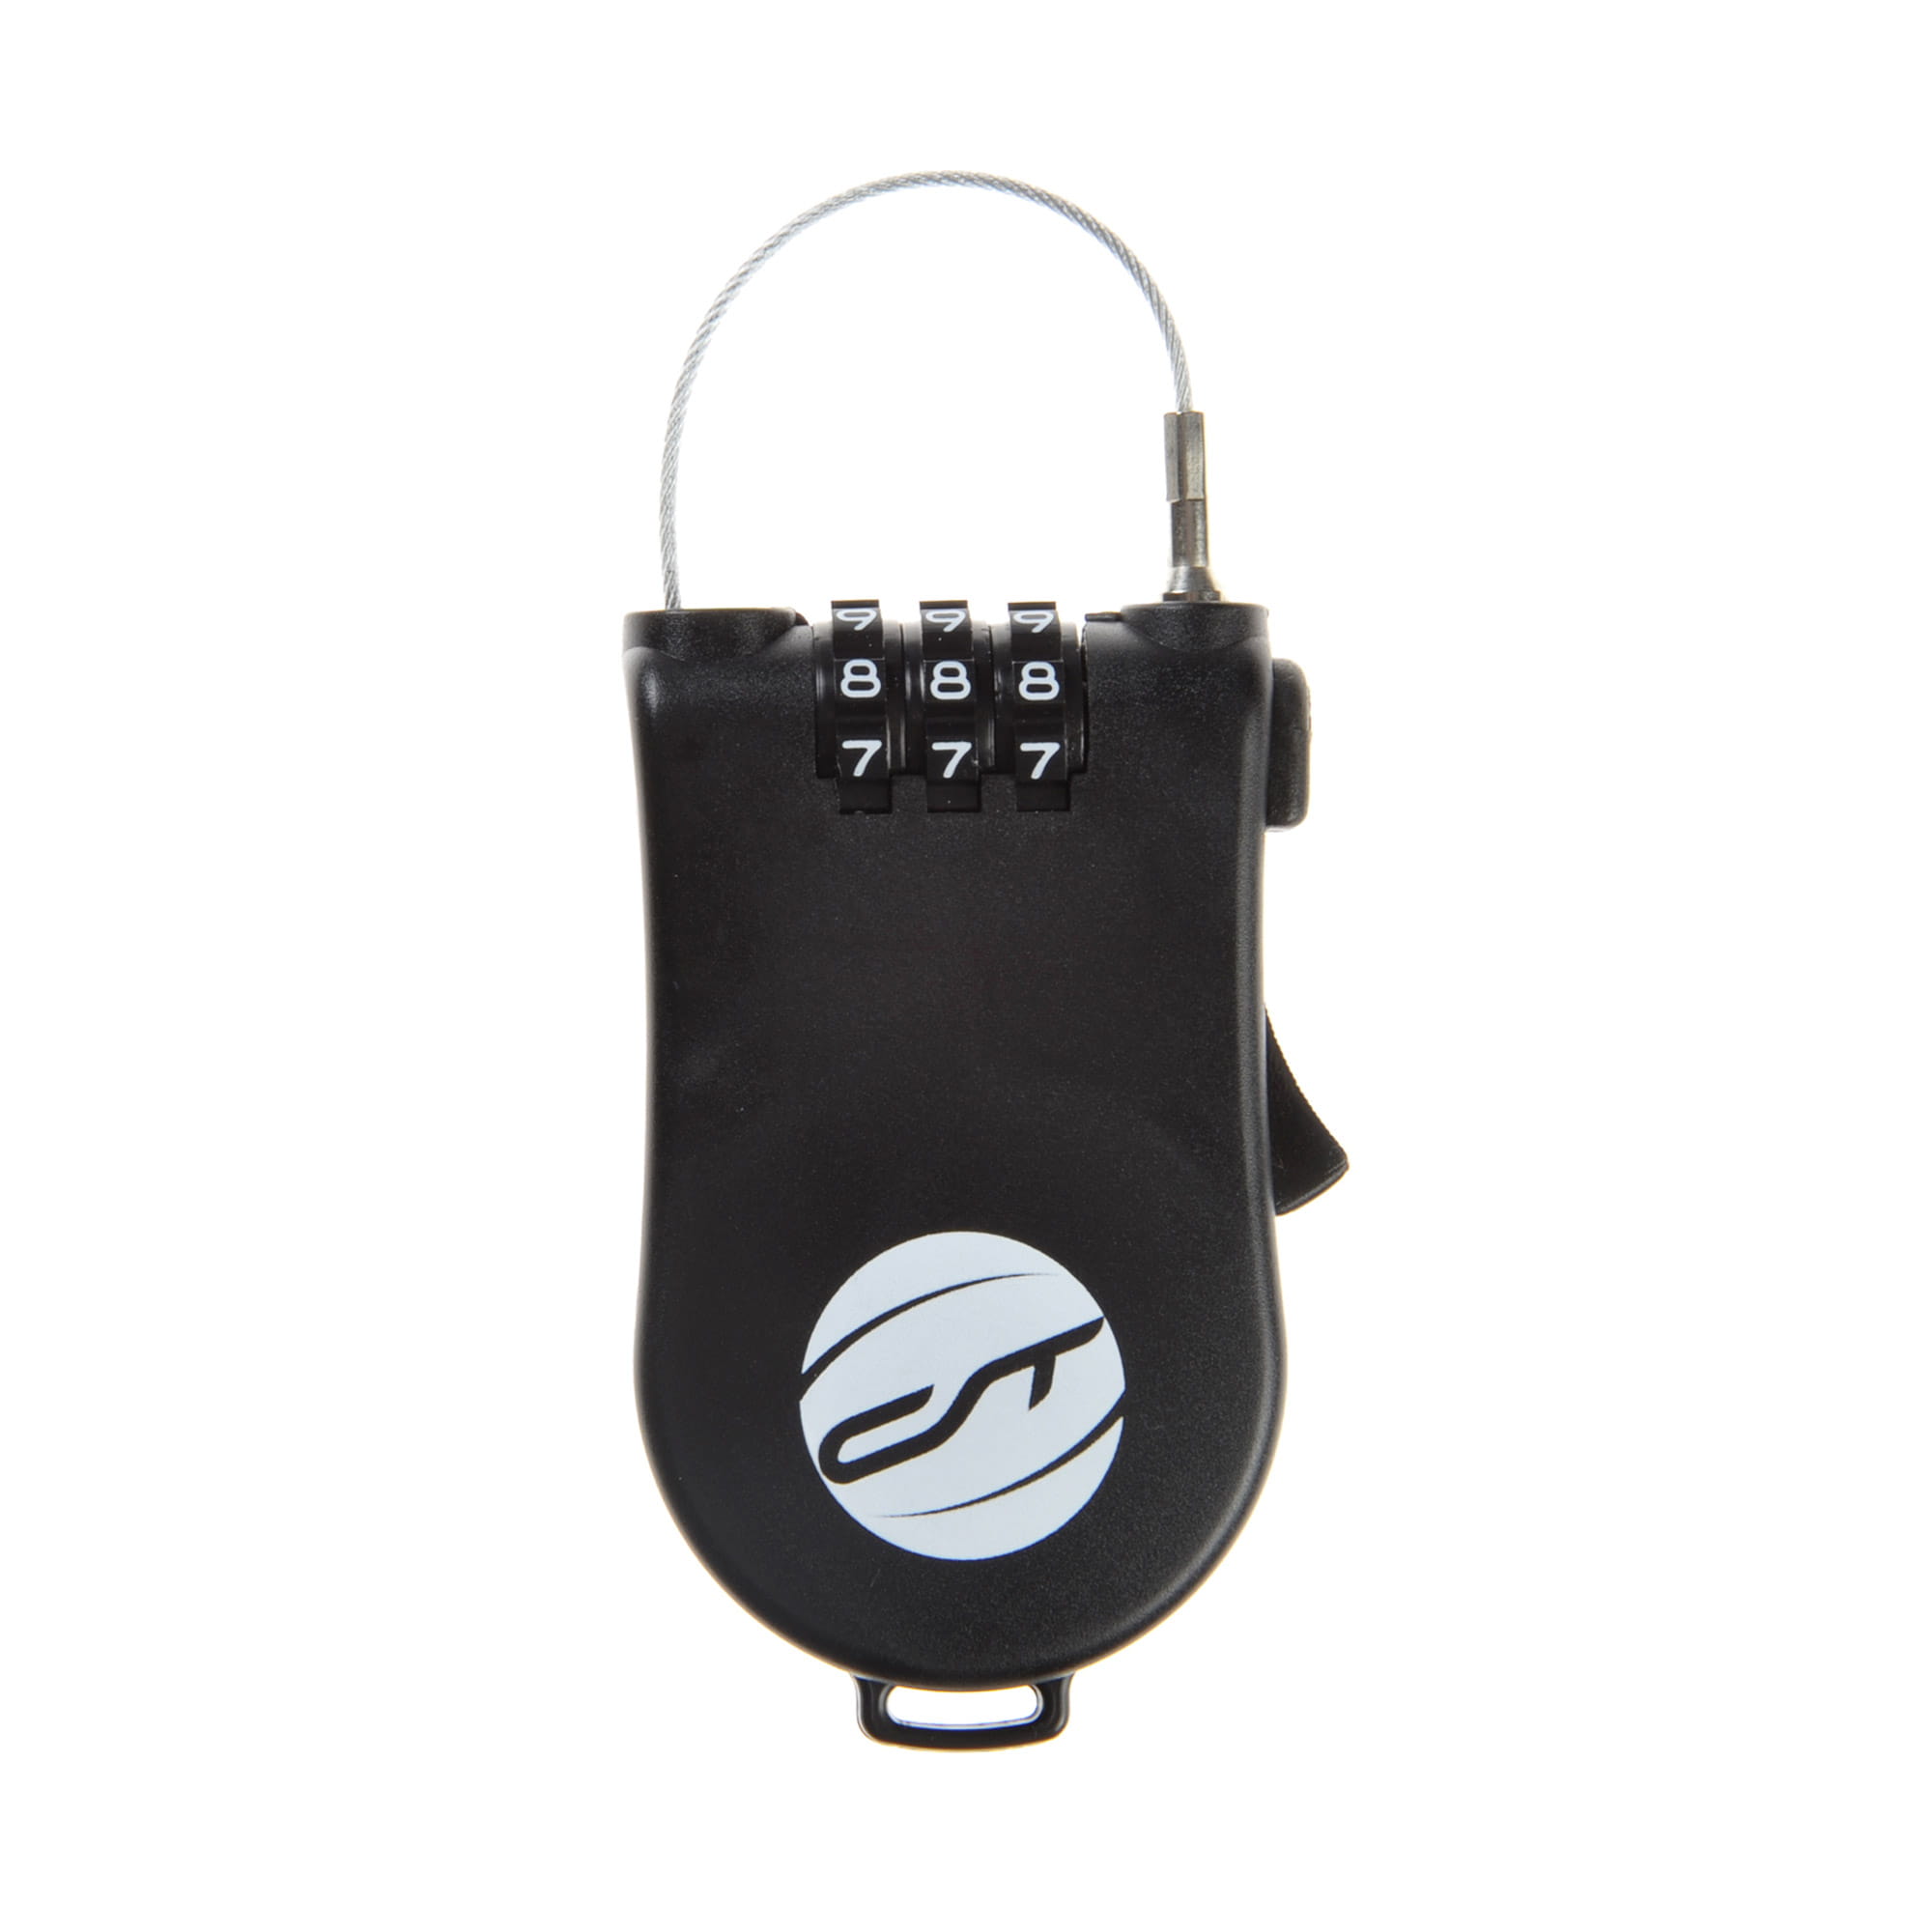 Contec Radio Lock Helmschloss / Cable Lock with Kombination